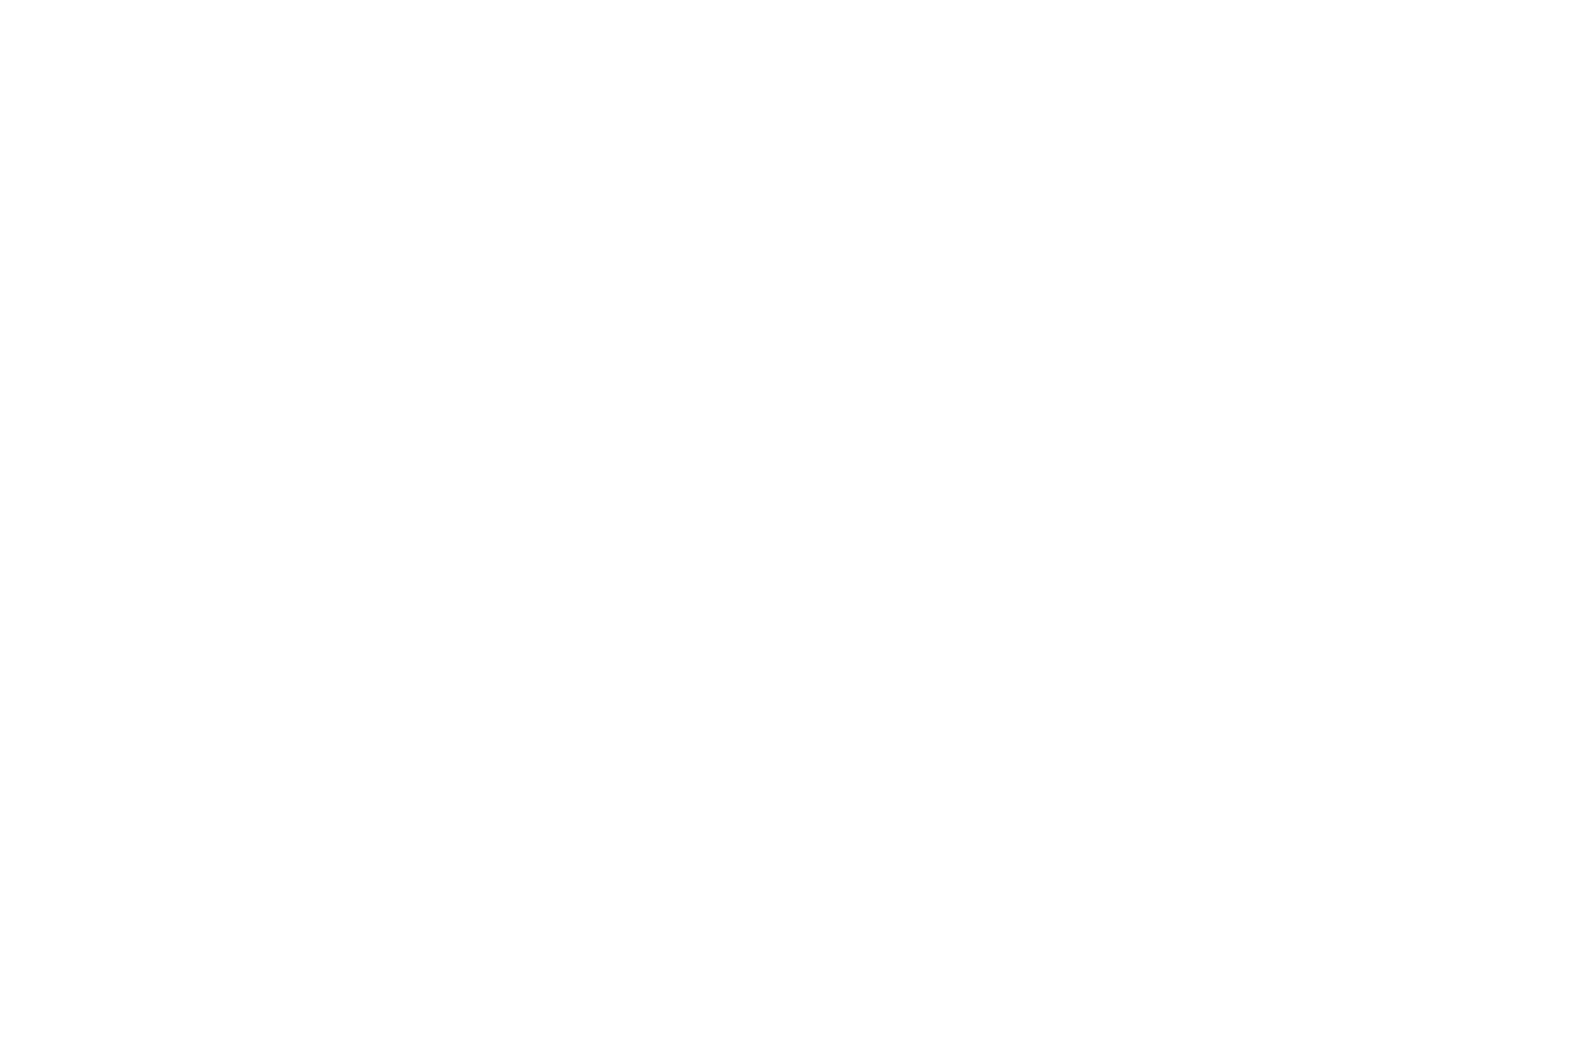 Waterdrop Inc. logo for dark backgrounds (transparent PNG)